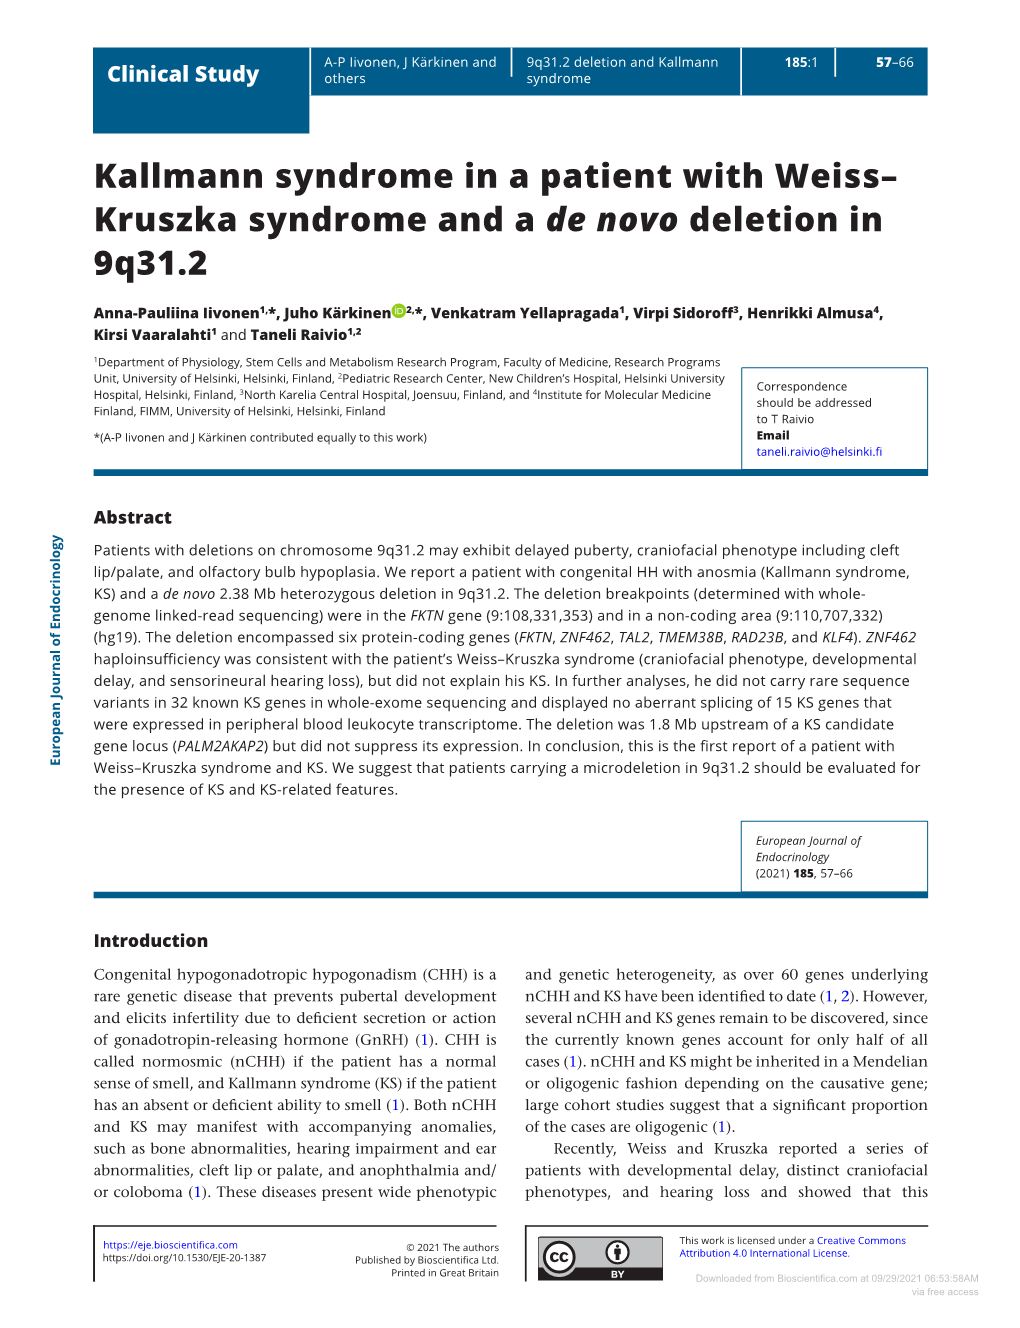 Kruszka Syndrome and a De Novo Deletion in 9Q31.2